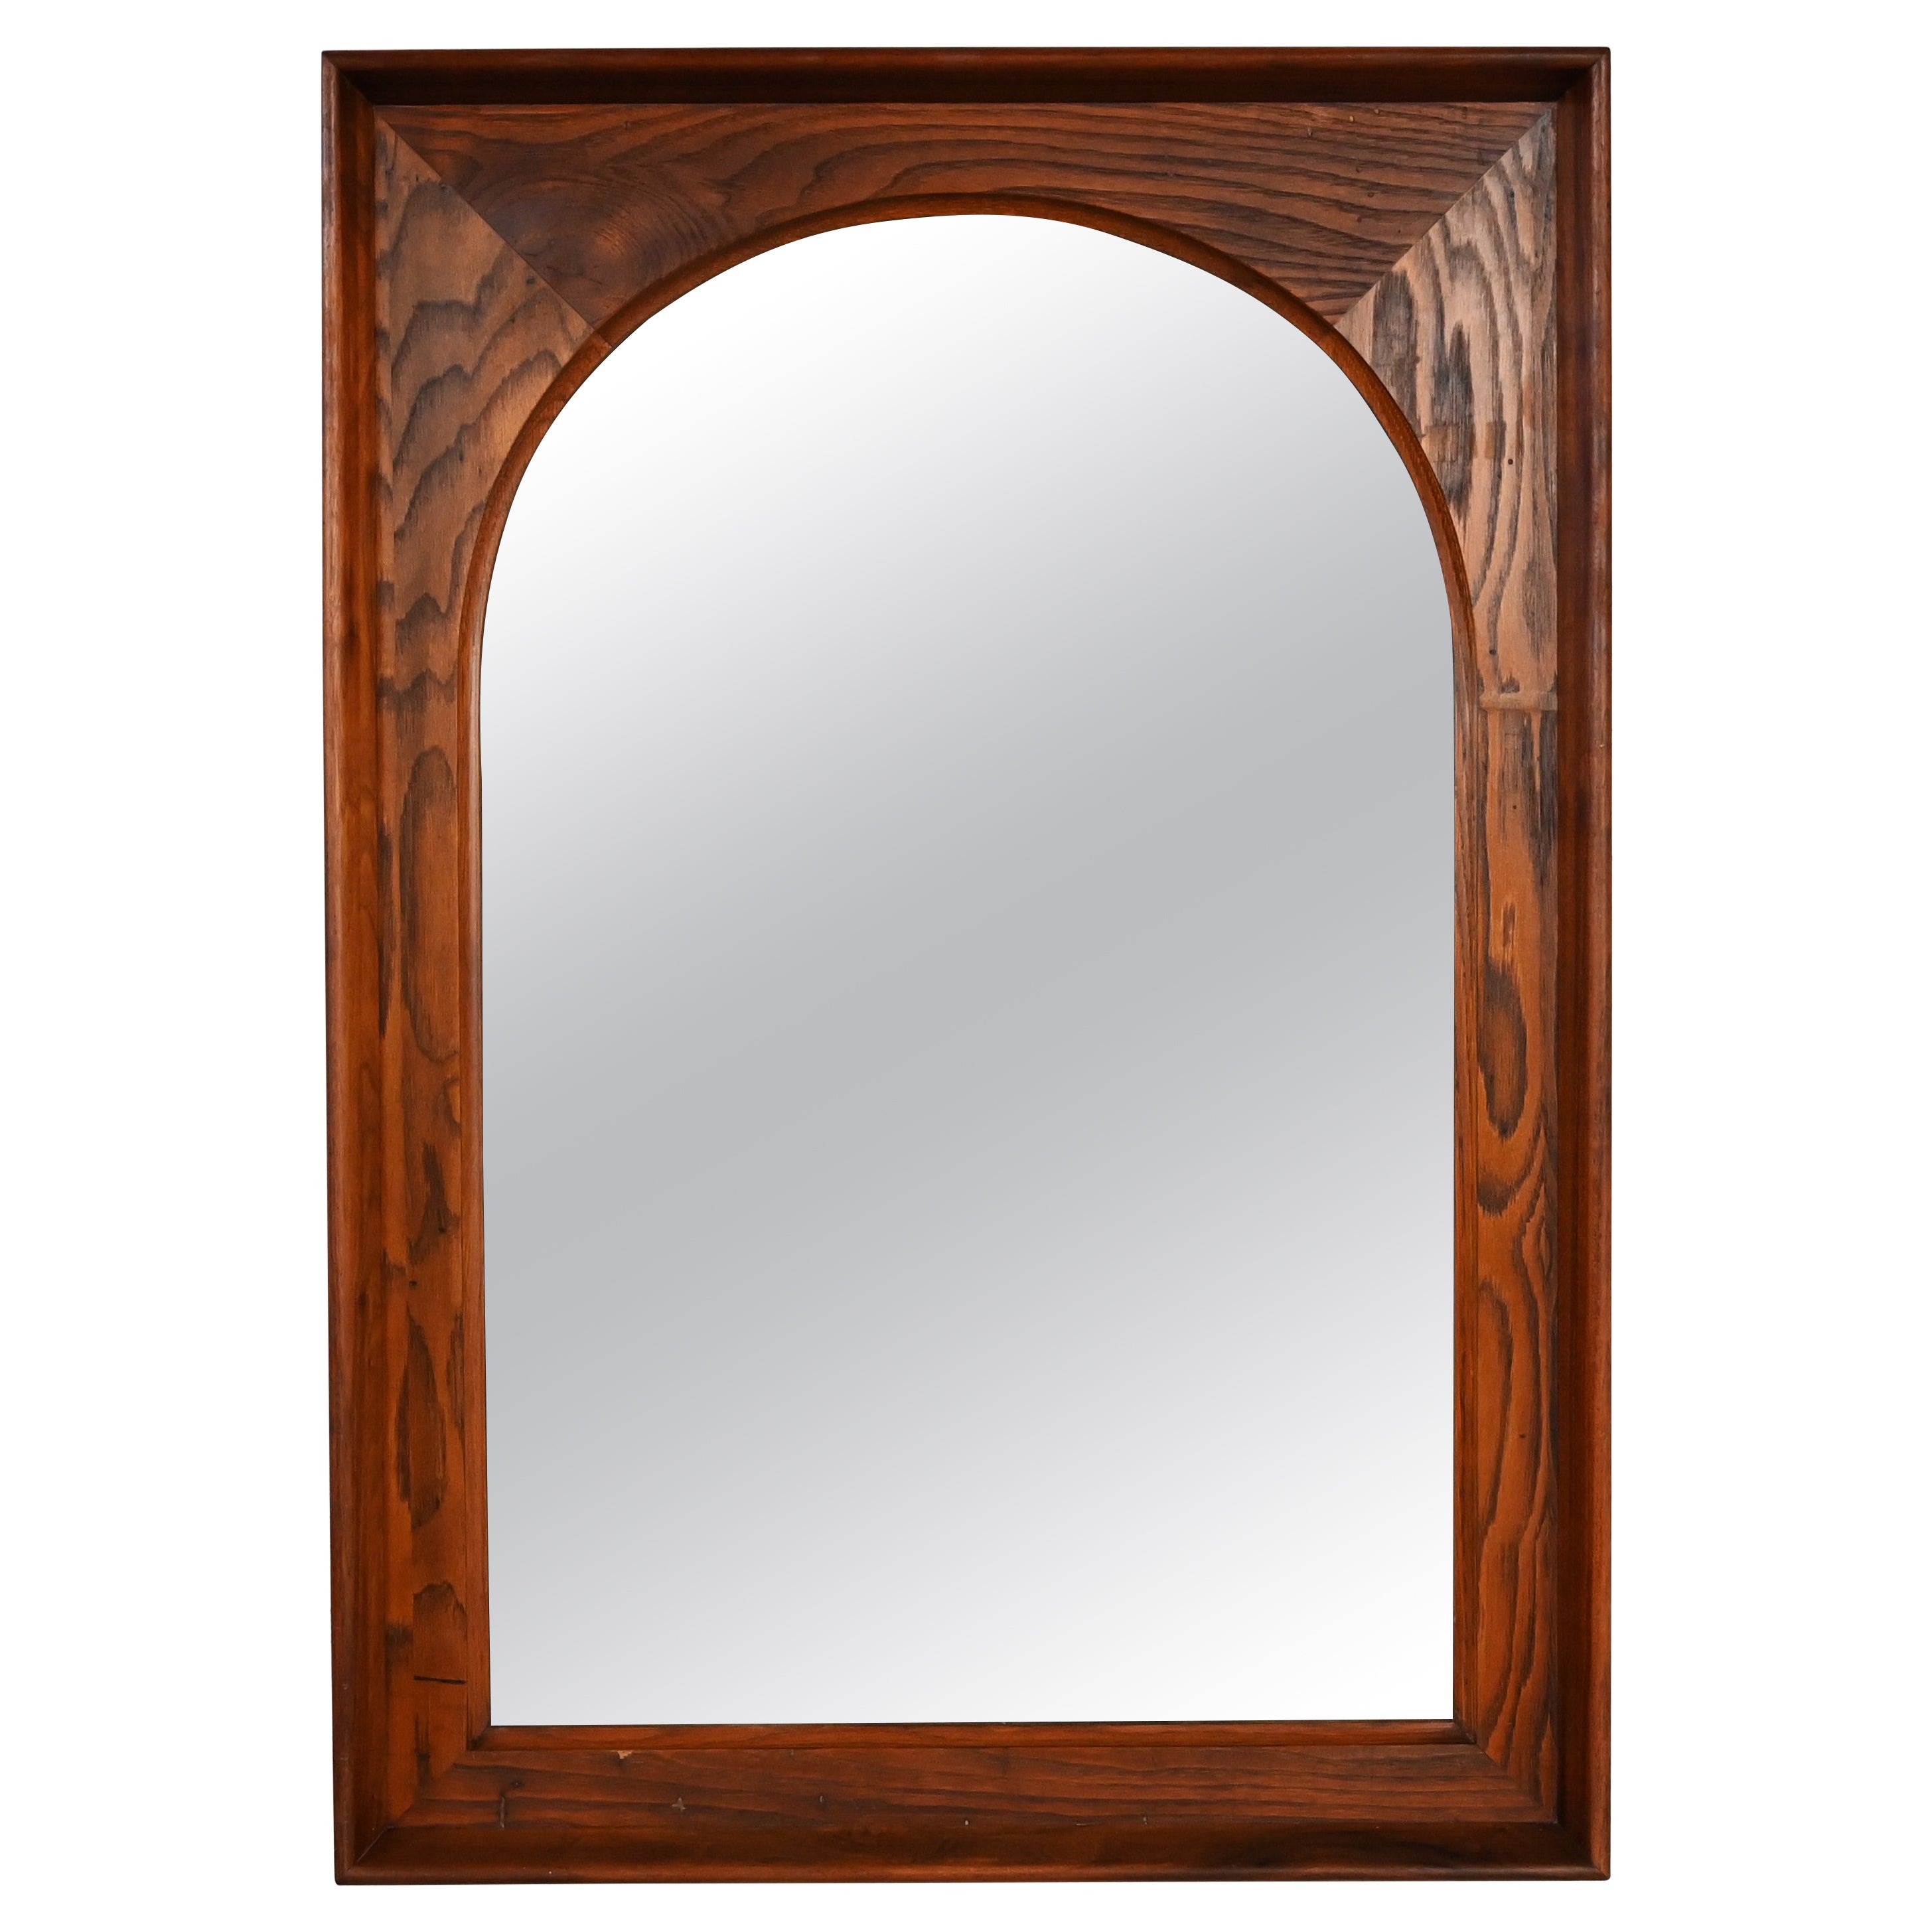 Mid Century Modern Framed Arch Mirror by Dillingham Pecky Cypress Walnut Trim For Sale